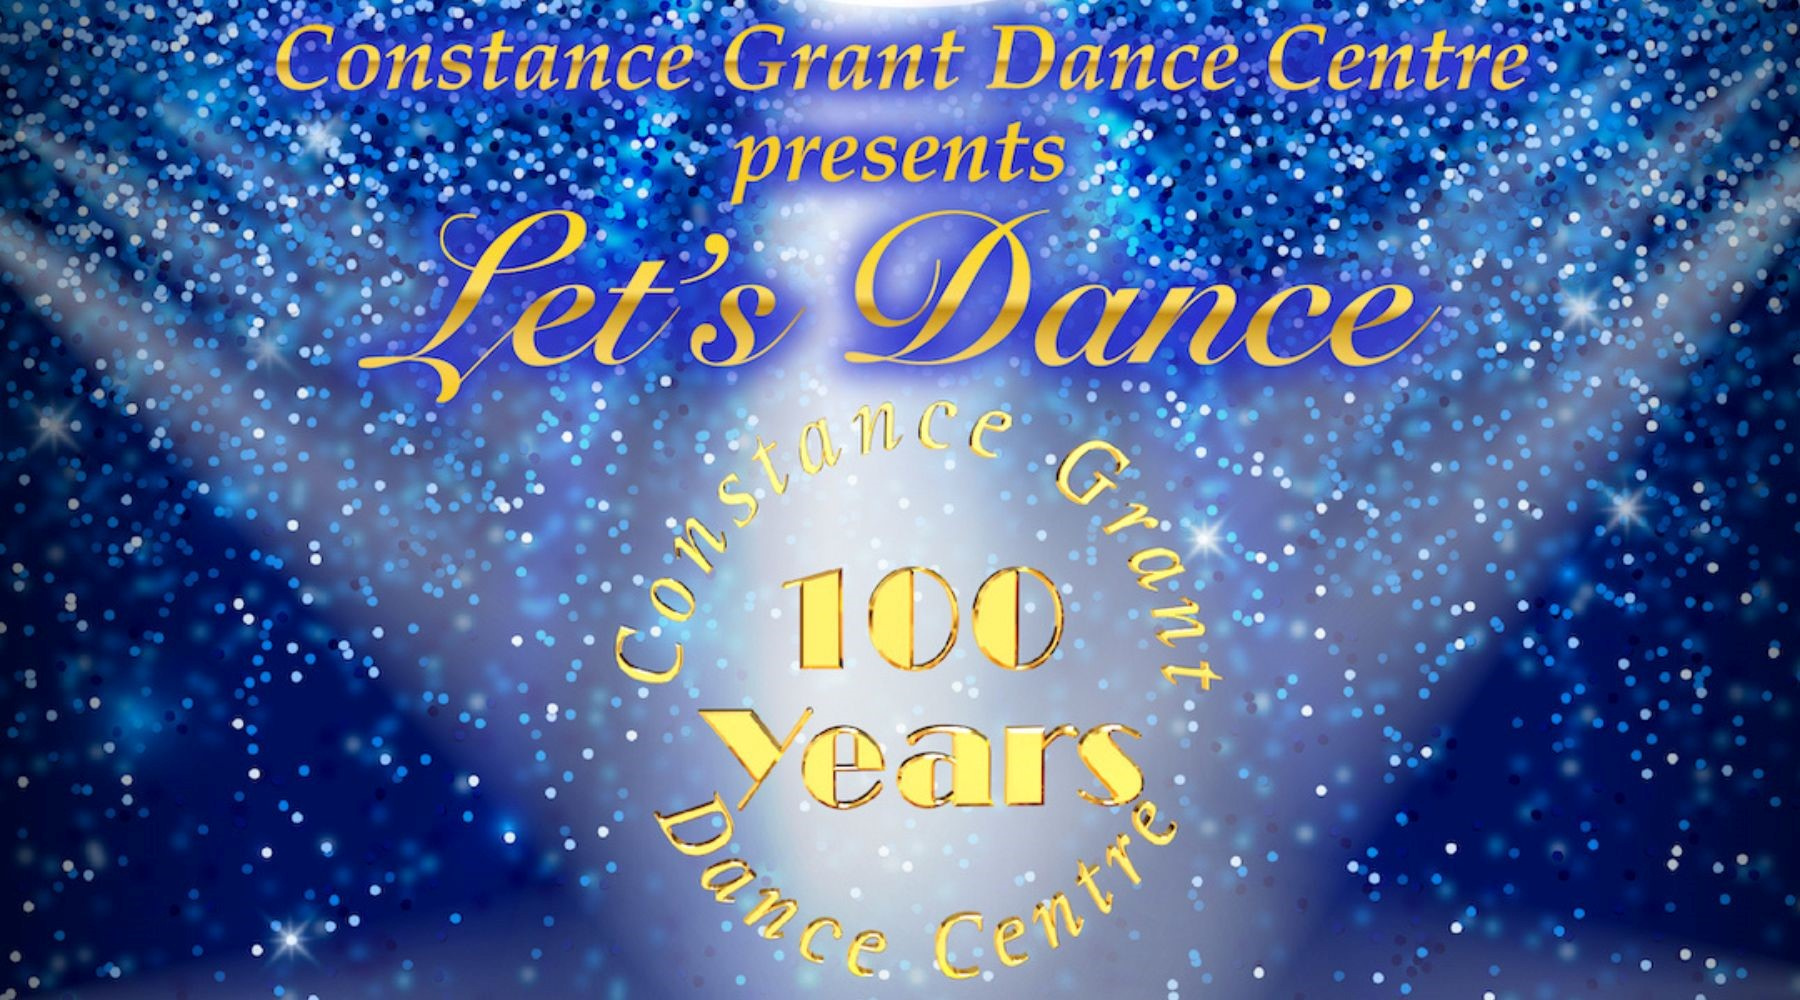 Let's Dance - 100 Years of CGDC